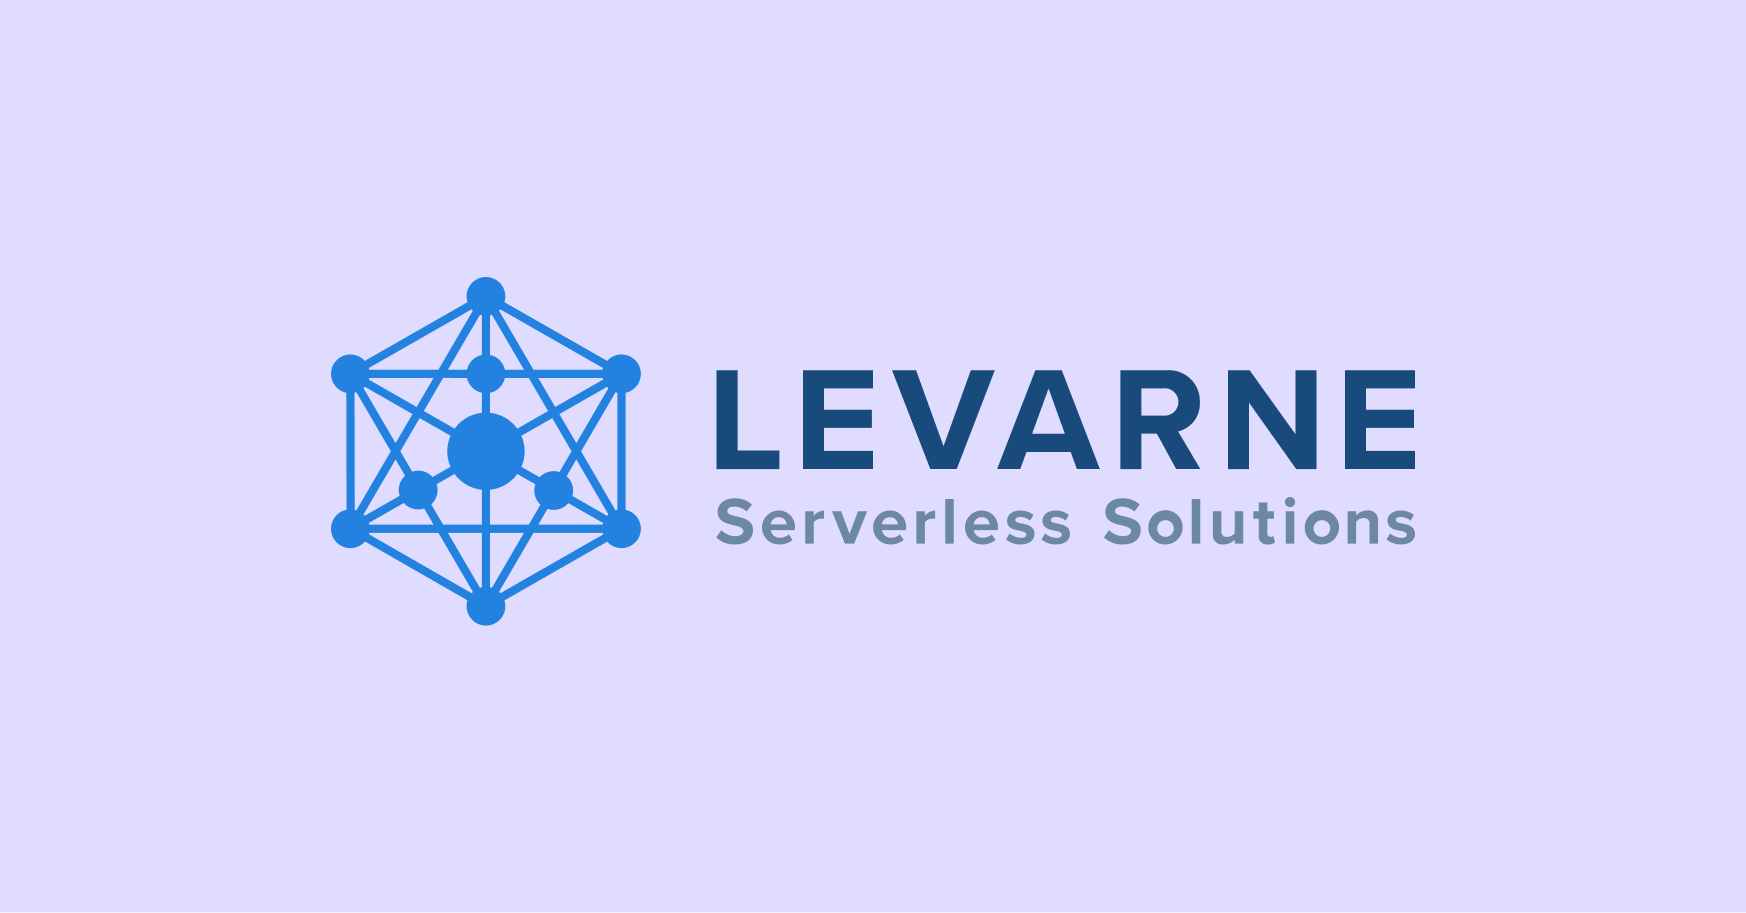 Agency Levarne logo with background